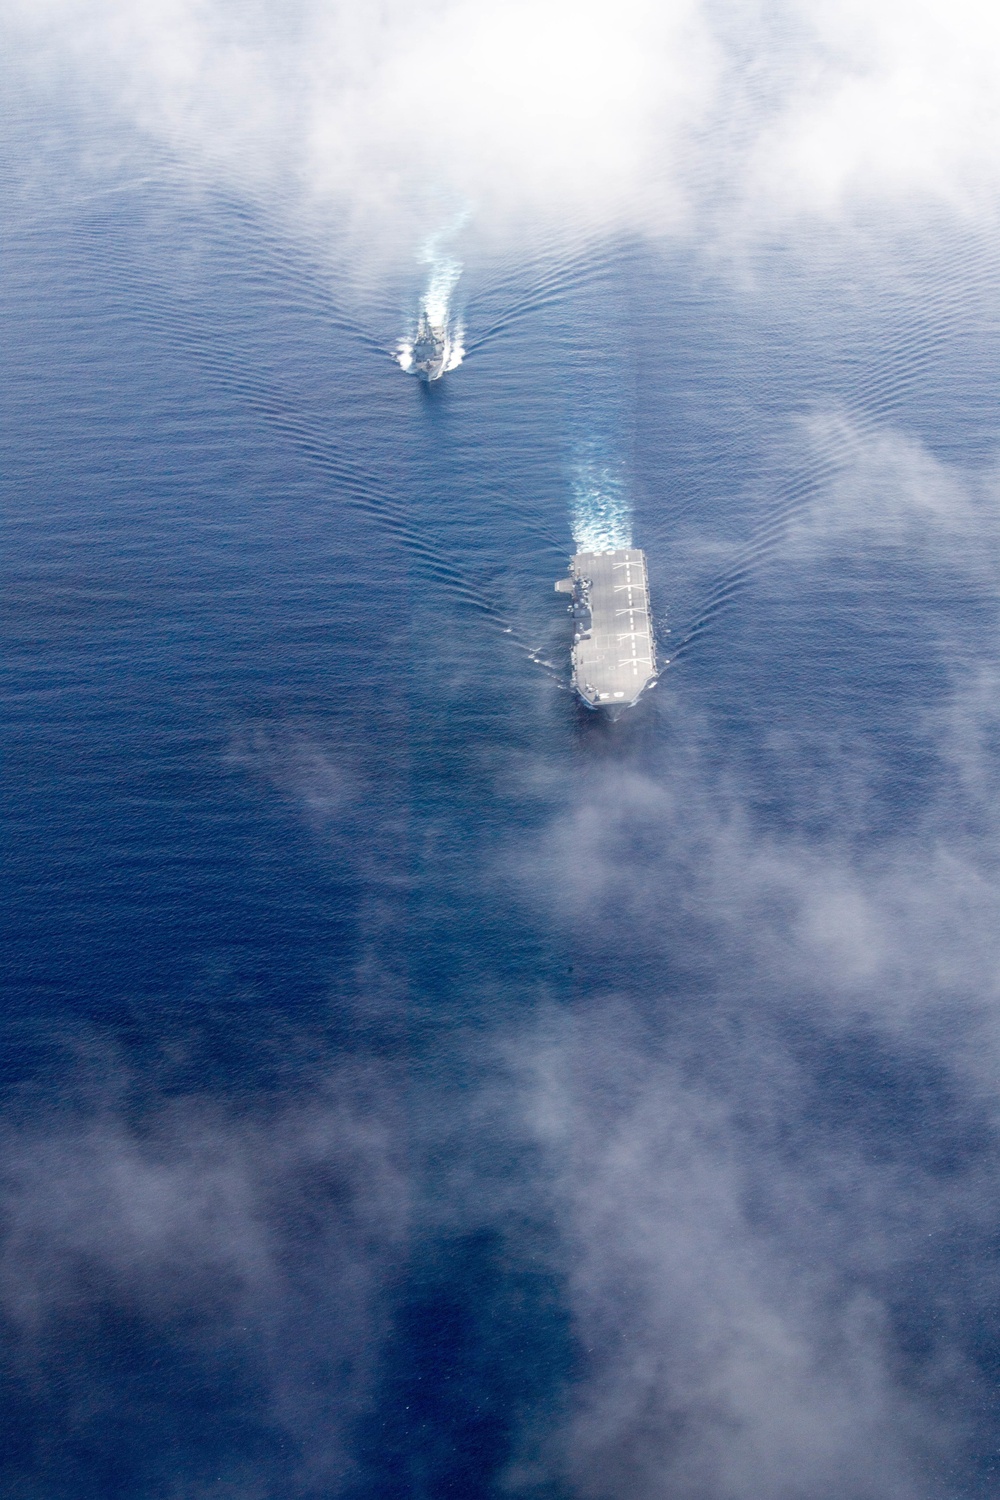 Dewey transits South China Sea with JMSDF ships